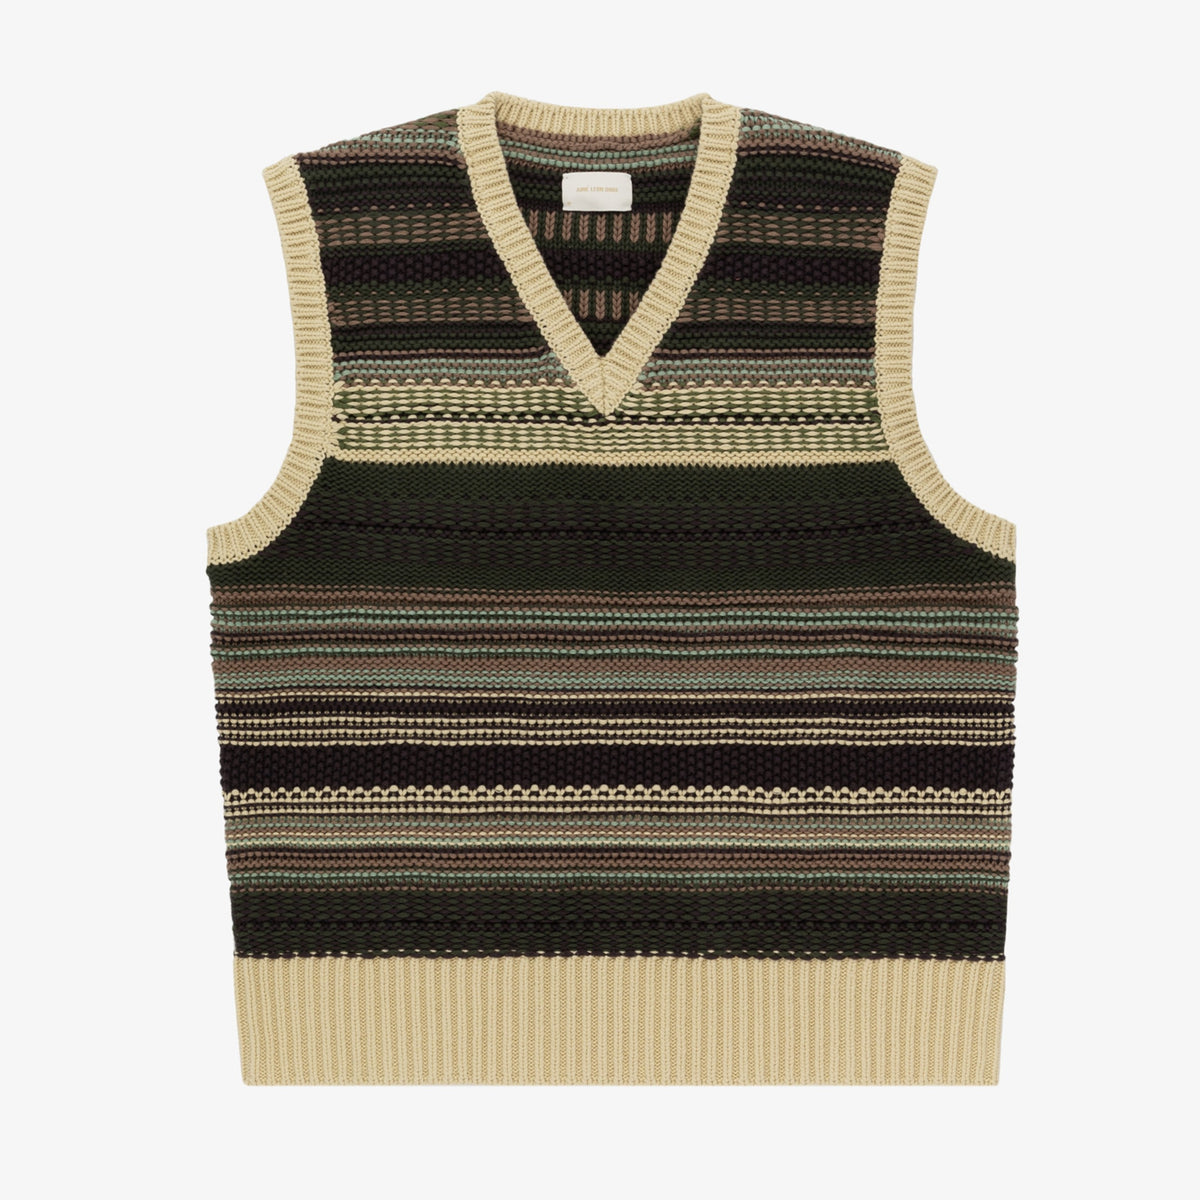 Striped Sweater Vest at AimeLeonDore.com